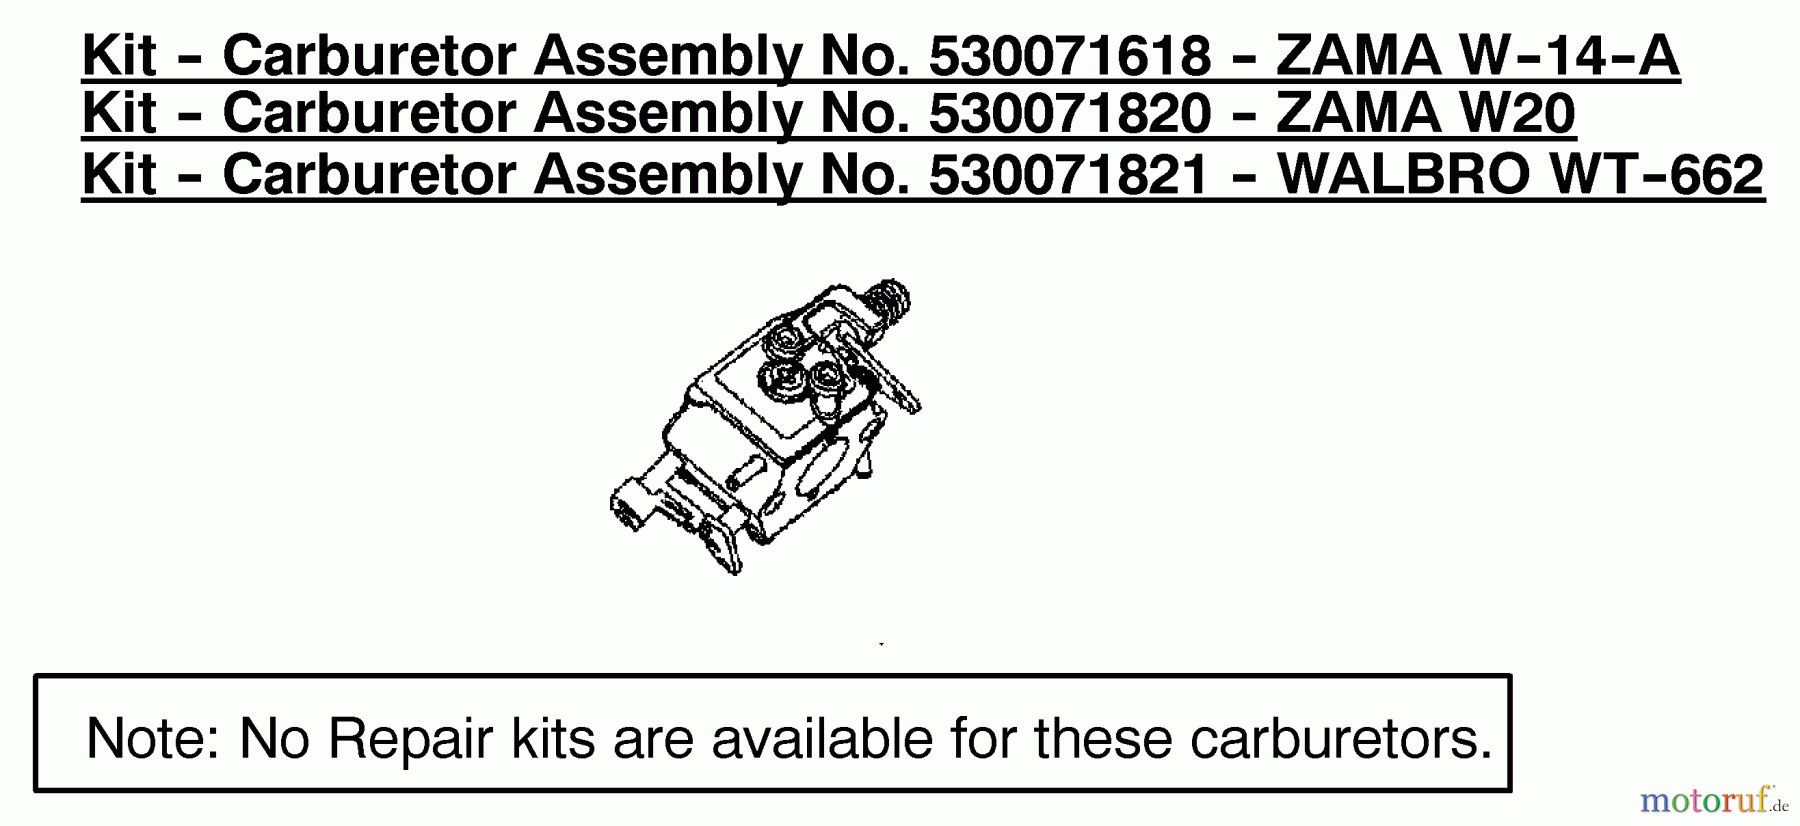  Poulan / Weed Eater Motorsägen 1975 (Type 5) - Poulan Woodshark Chainsaw Carburetor Assembly (Zama W20) P/N 530071820